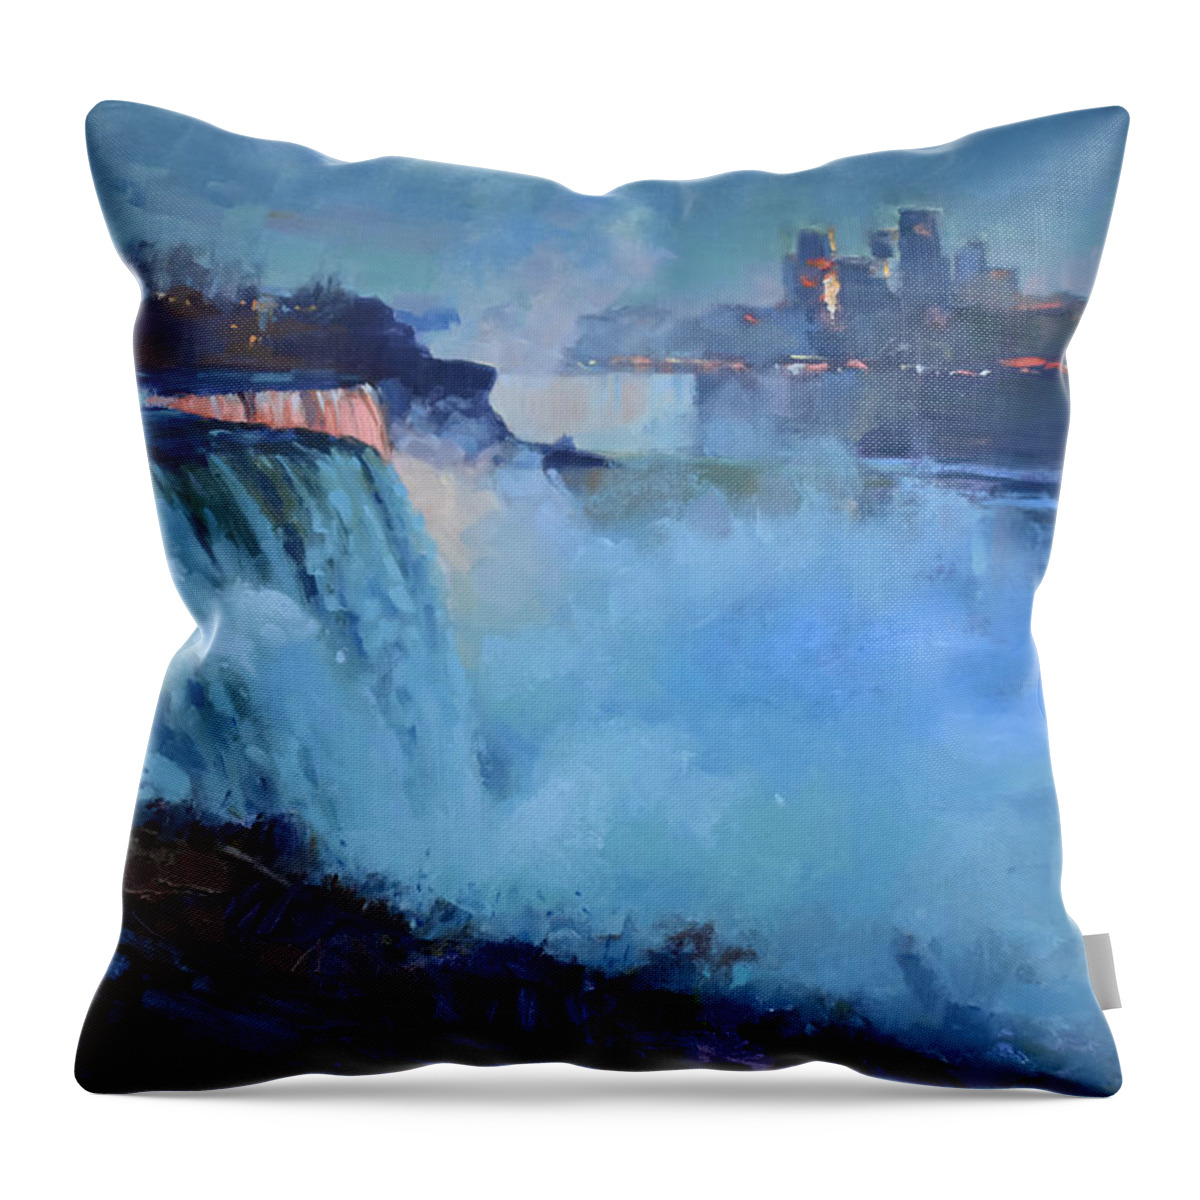 Niagara Falls Throw Pillow featuring the painting Niagara Falls Nocturne by Ylli Haruni